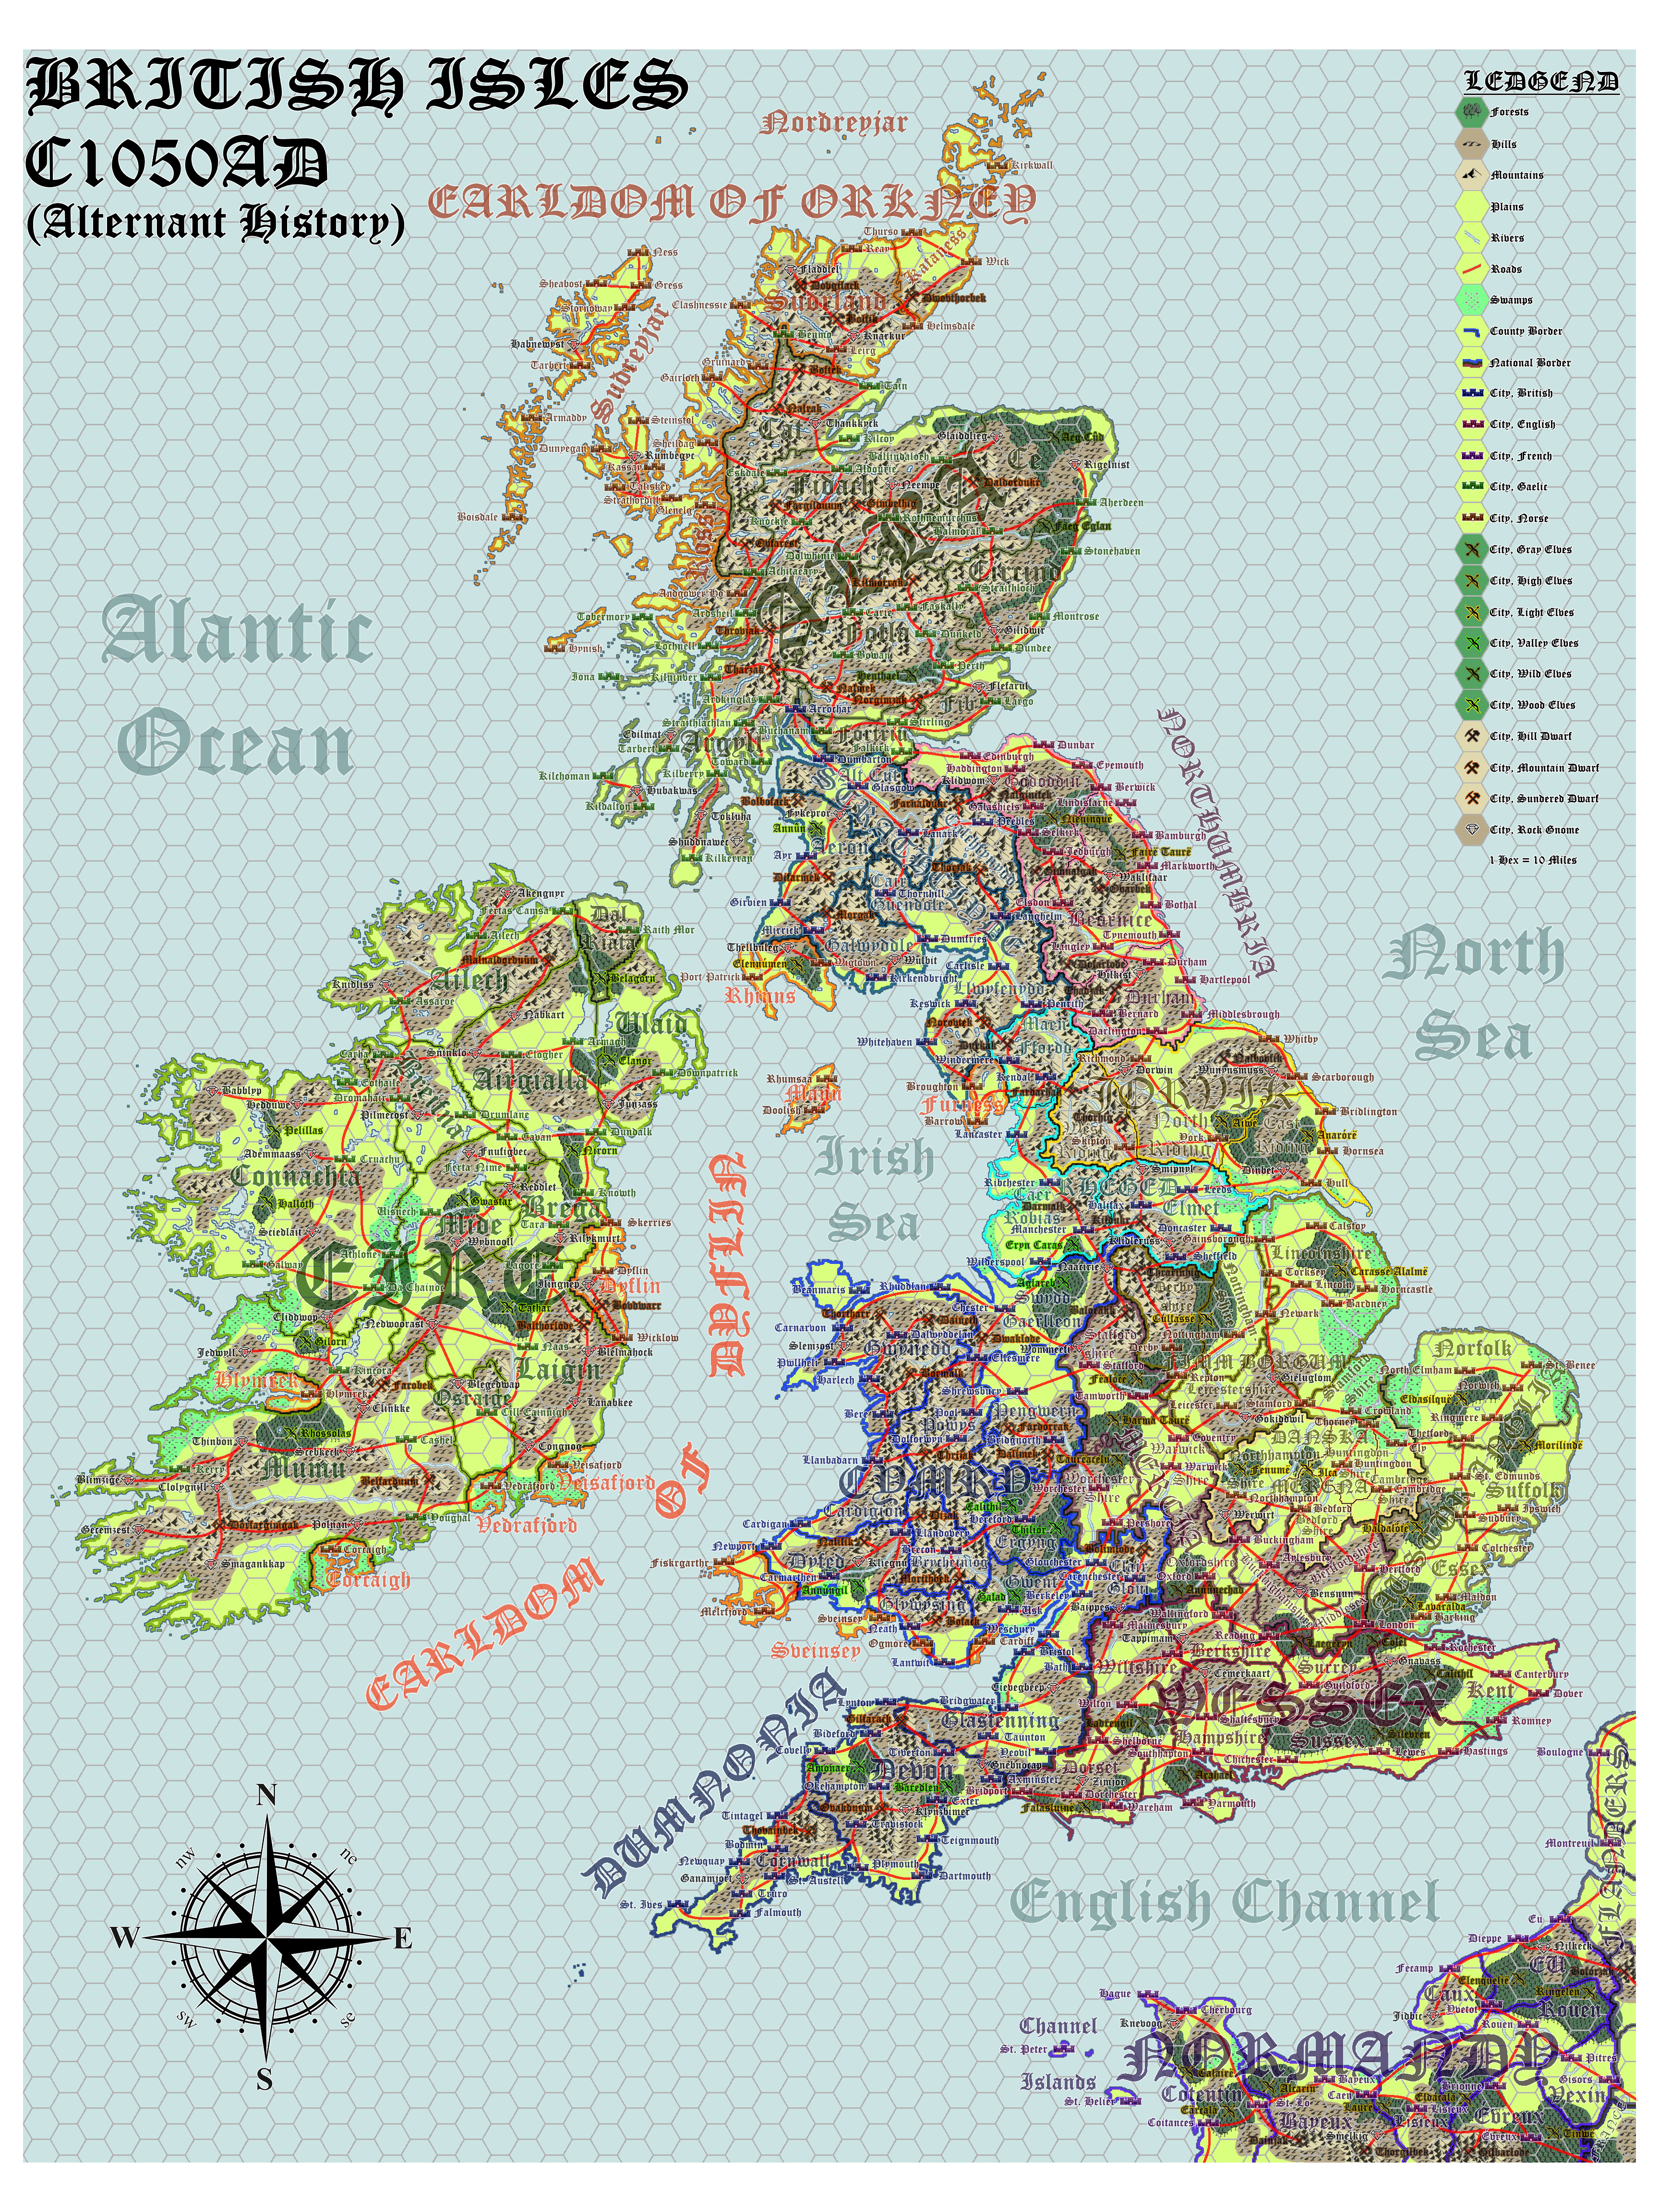 British Isles 1000 AD Alt Hist Terrain.png